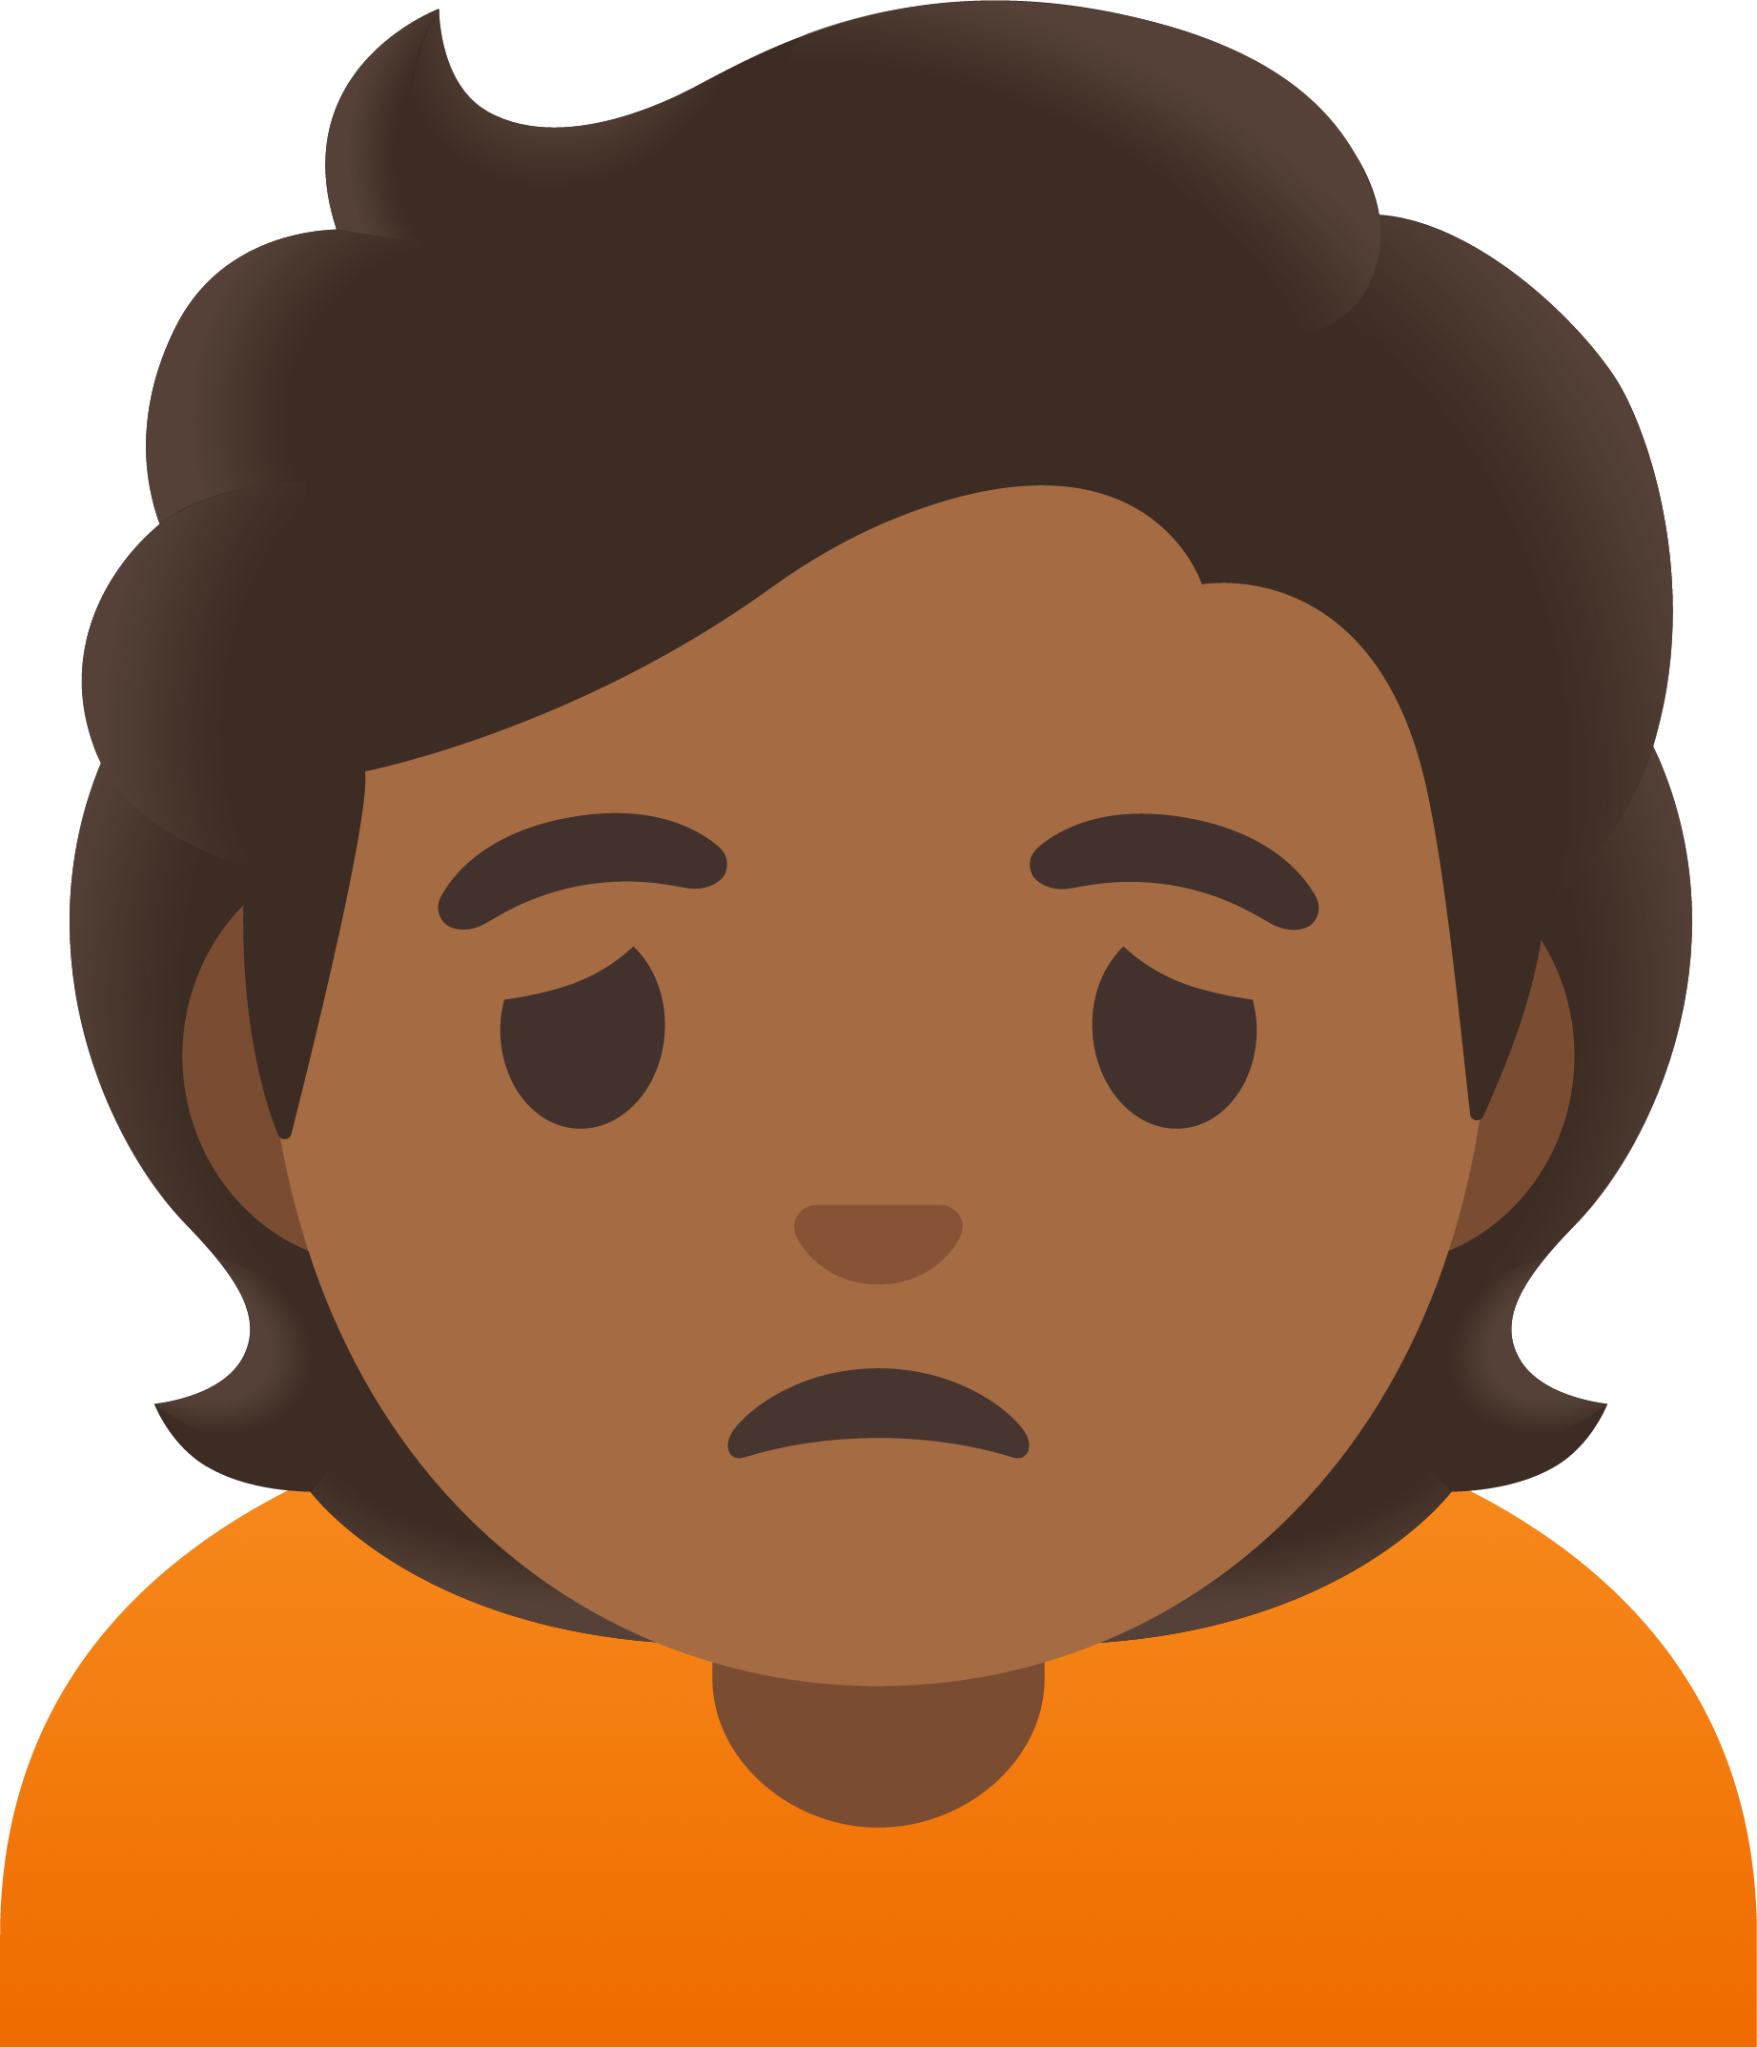 person frowning: medium-dark skin tone emoji